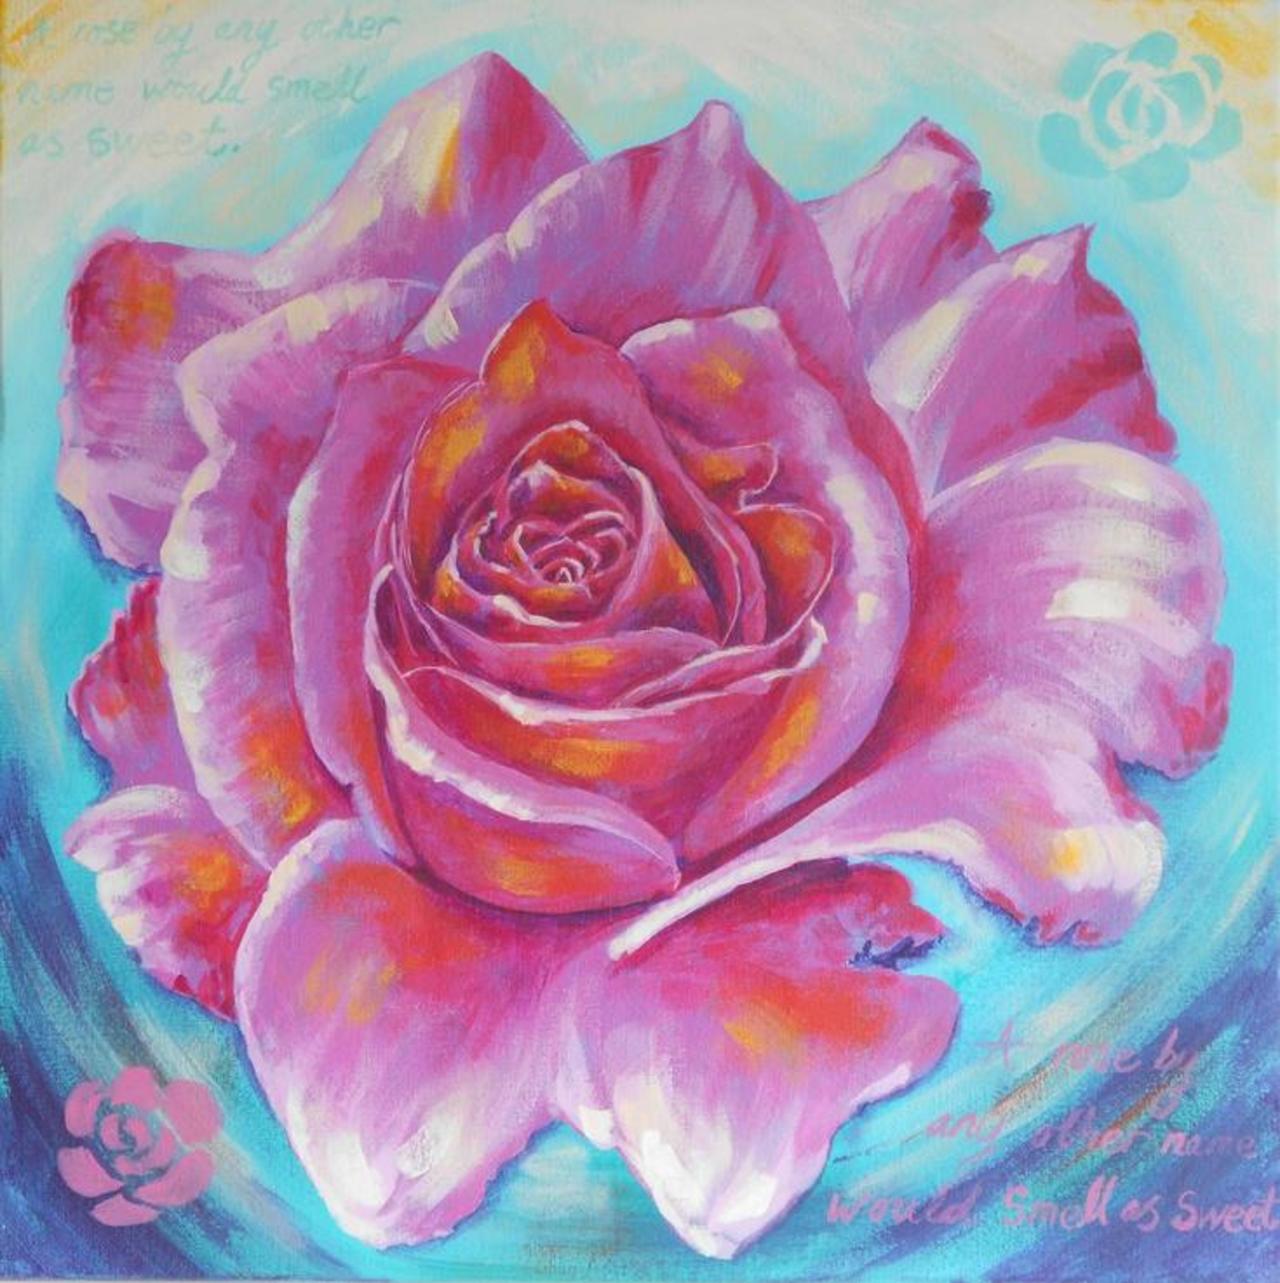 Rose by Jessica Stone #acrylic #painting #art http://artf.in/1GiWTFQ @artfinder http://t.co/fDkGun6TGZ